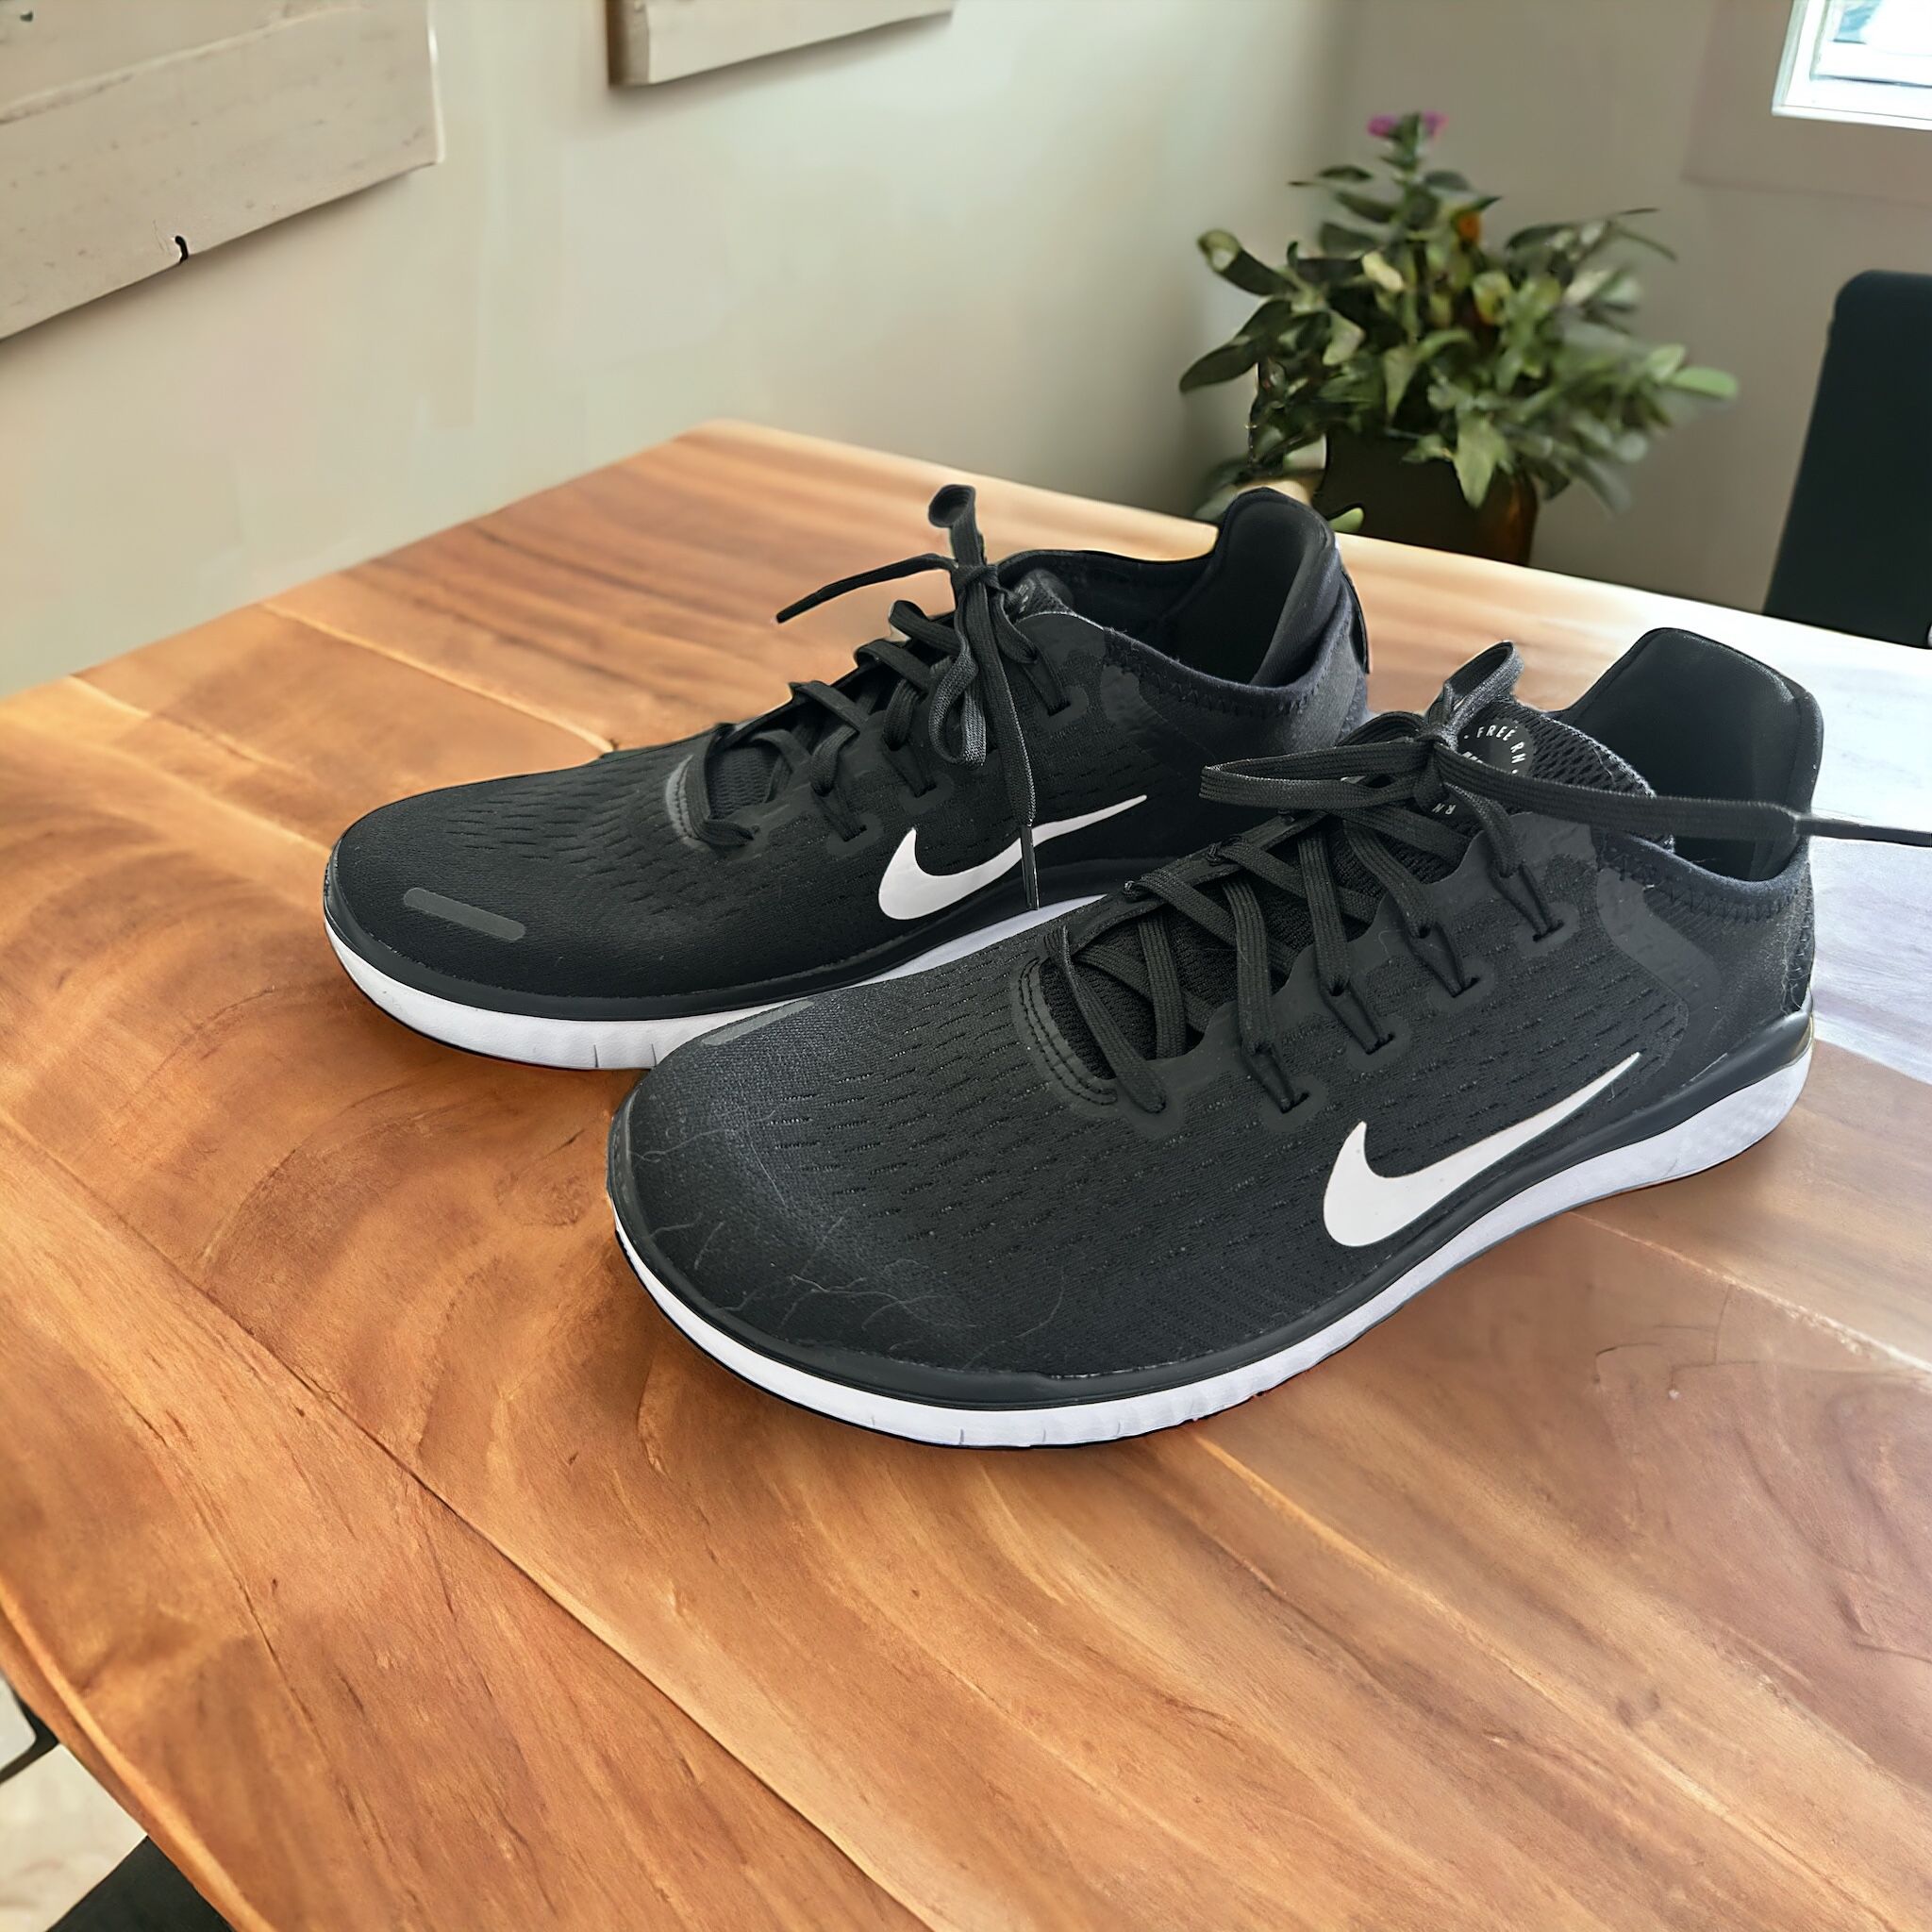 Nike Men’s Free Run Shoes 8.5 US